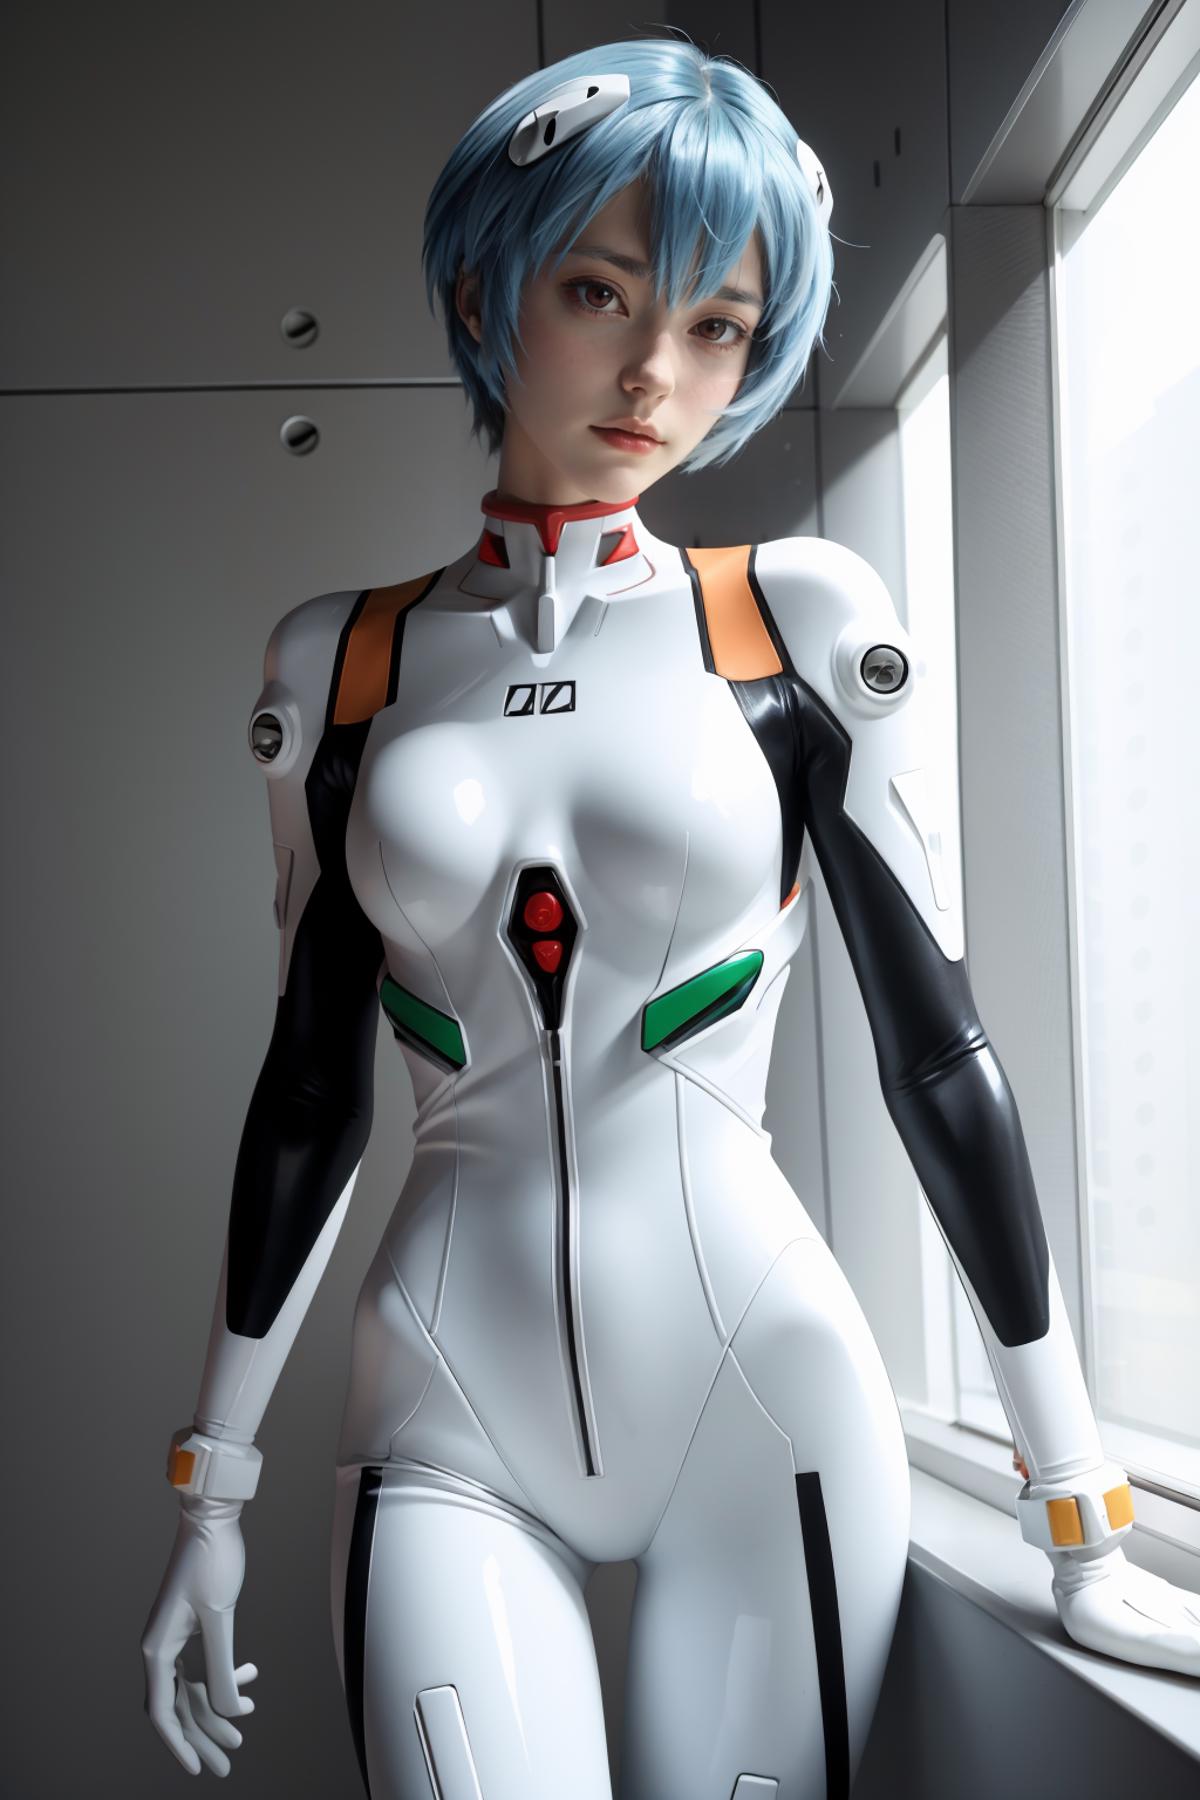 Rei Ayanami (Neon Genesis Evangelion) image by Looker